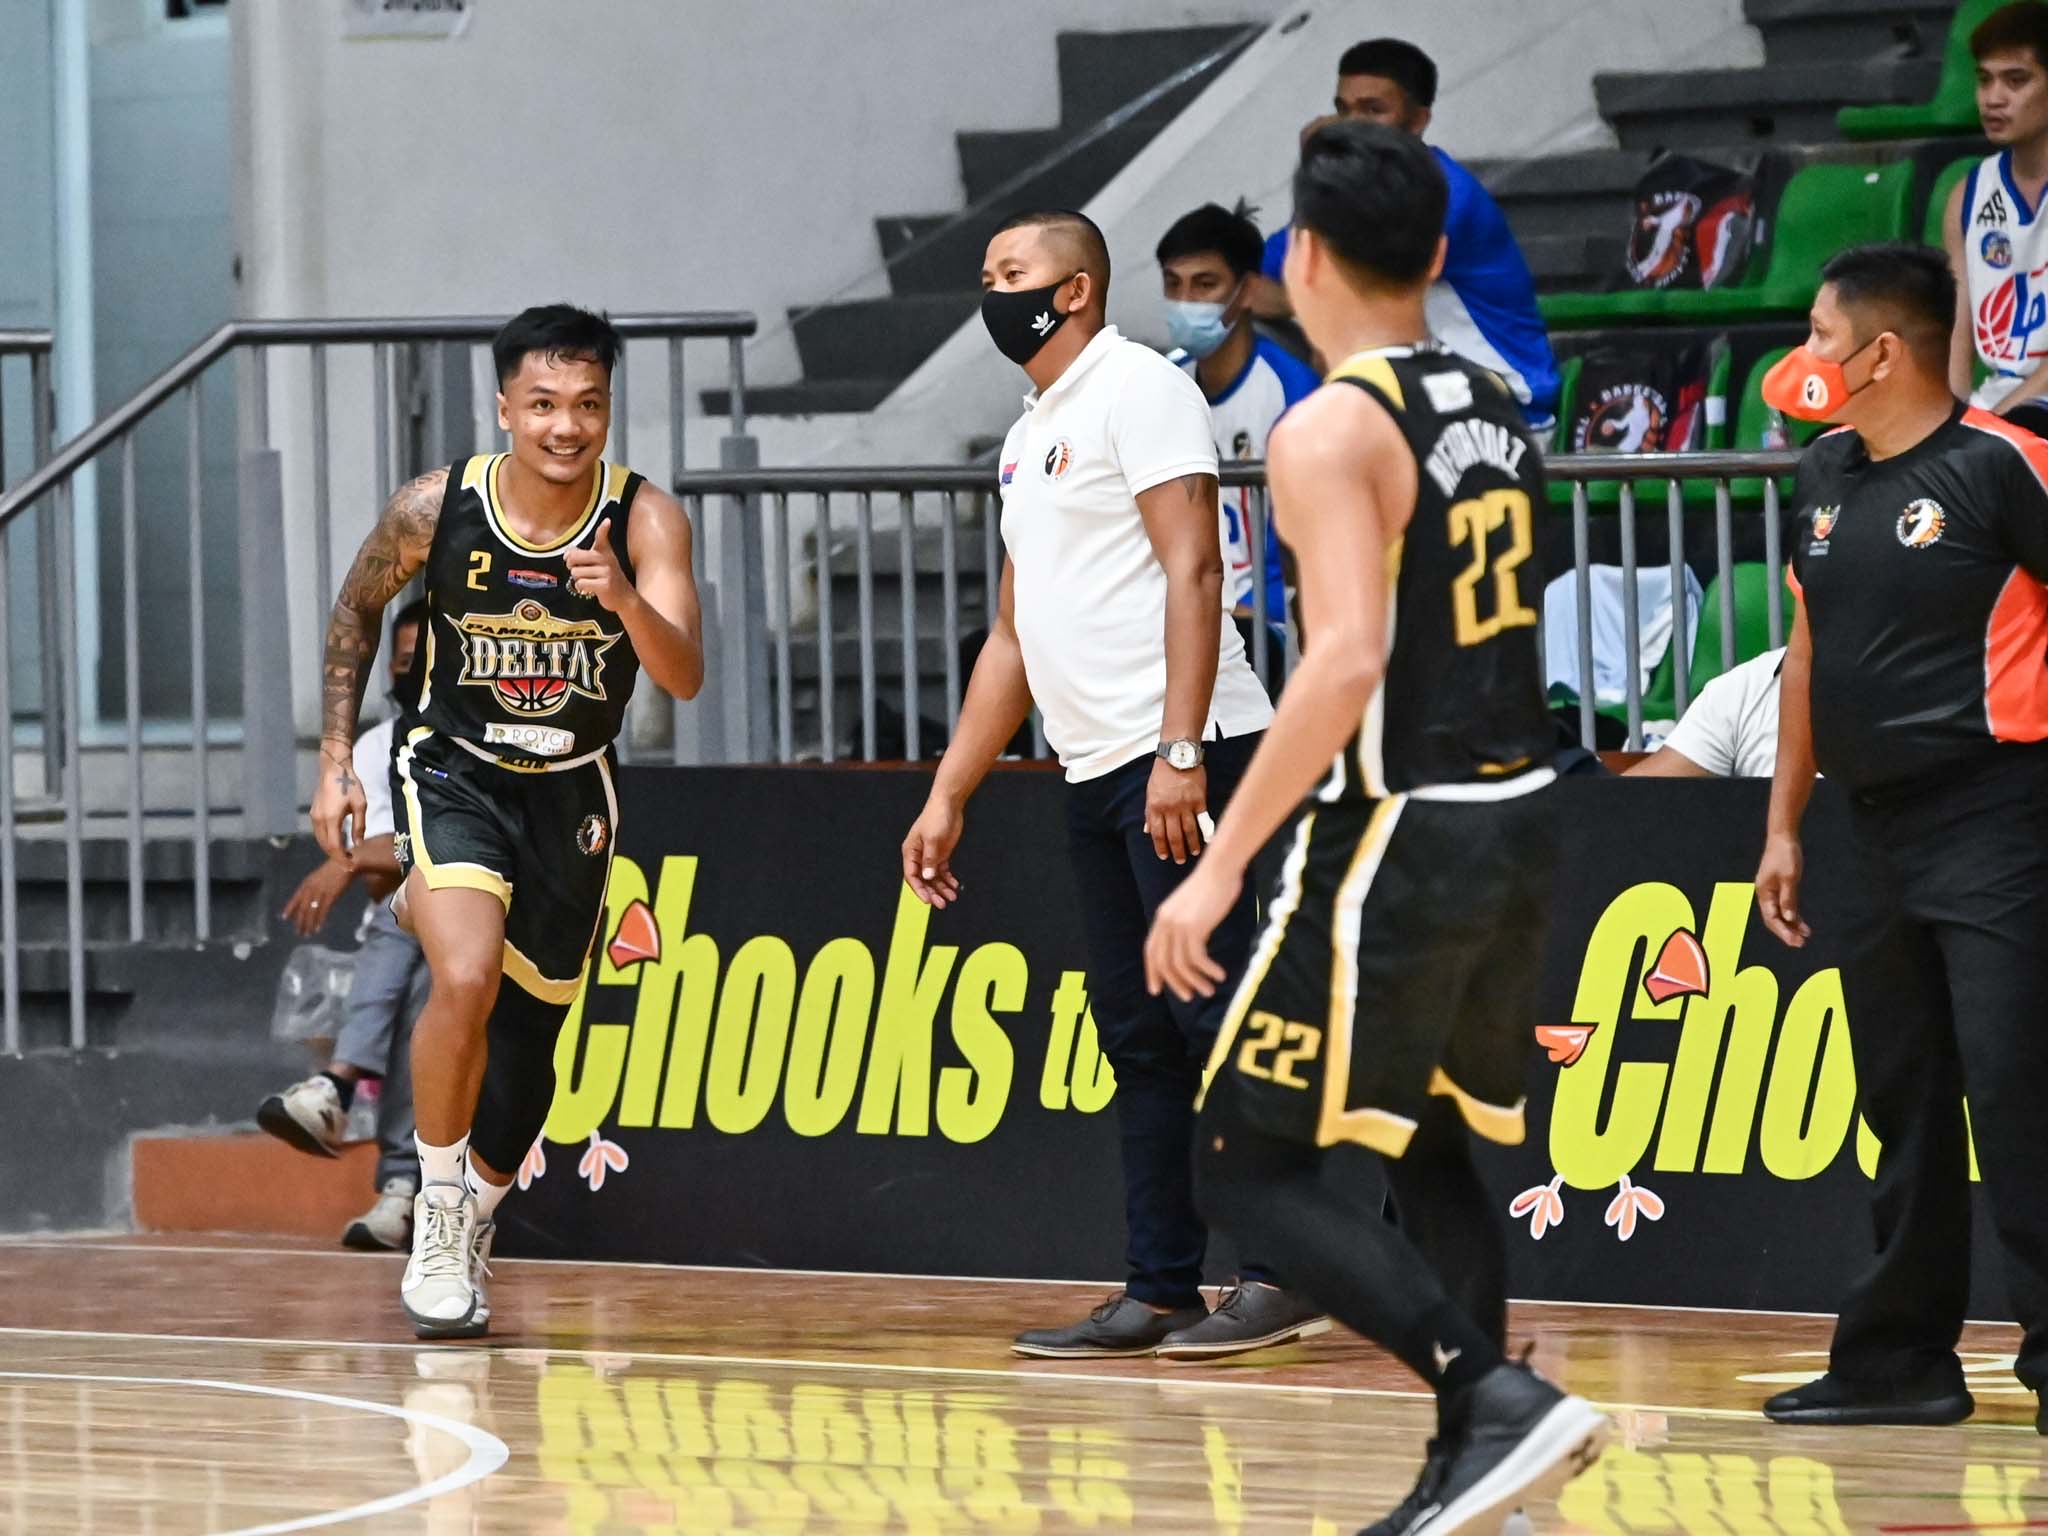 2021-Chooks-to-Go-NBL-Laguna-vs-Pampanga-ENCHO-SERRANO-LEVI-HERNANDEZ Levi Hernandez, Pampanga torch Laguna for second straight win in NBL Basketball NBL News  - philippine sports news